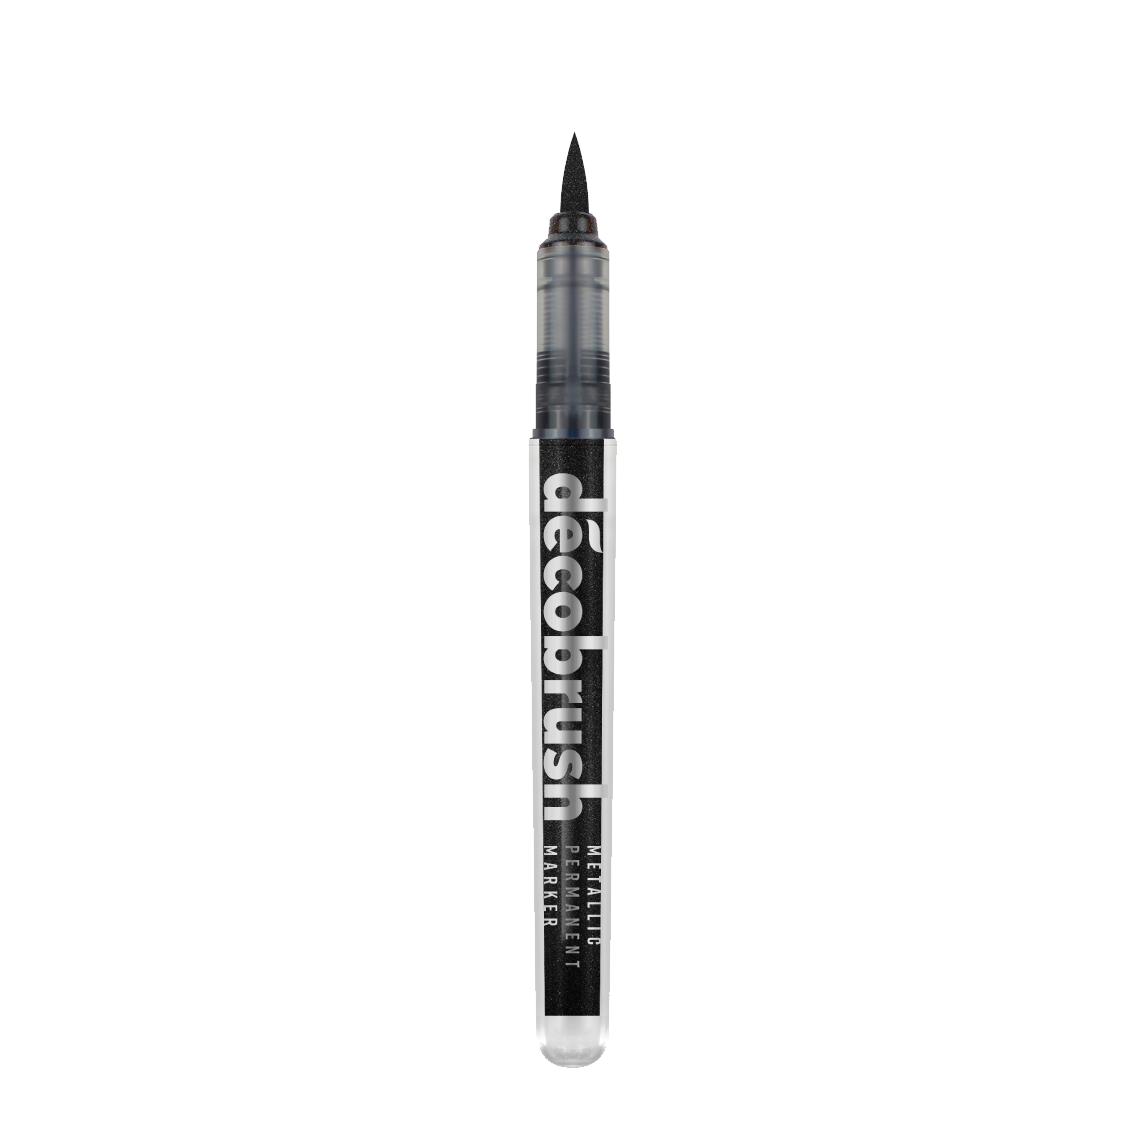 DécoBrush METALLIC brush pens - 10 colours set - Paper Kooka